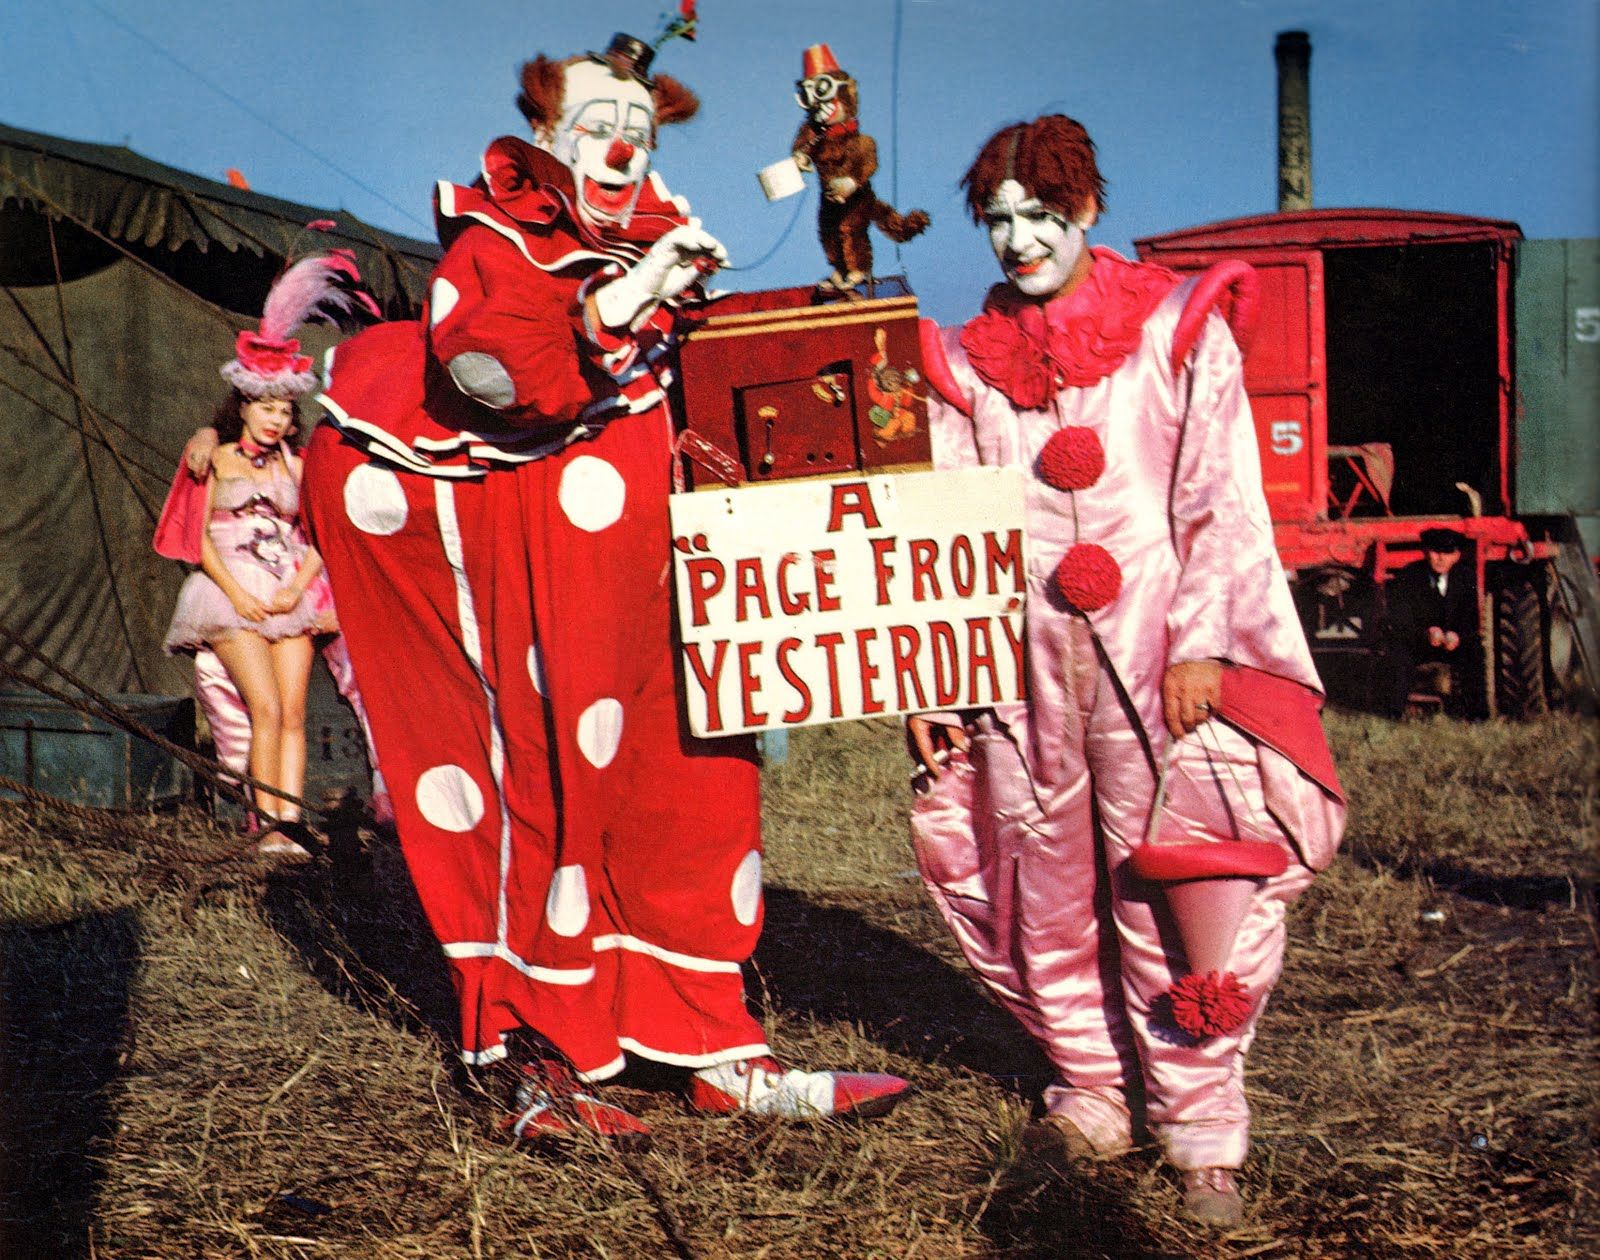 There three clowns at the. Клоун в цирке. Американский клоун. Клоун ретро. Клоуны американского цирка.